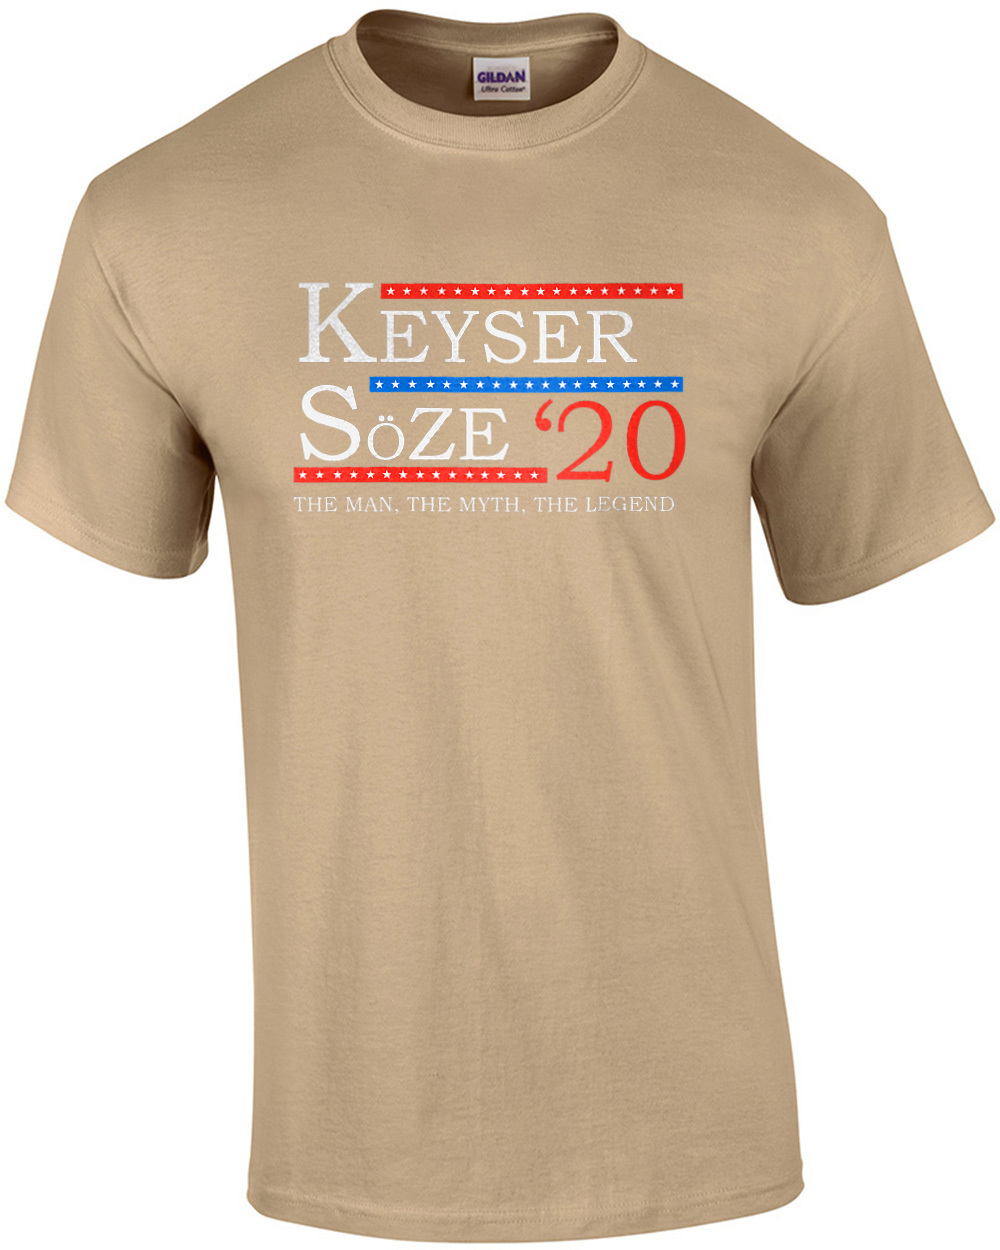 Keyser - Soze 2020 - The man, the myth, the legend - 2020 Election - The  Usua